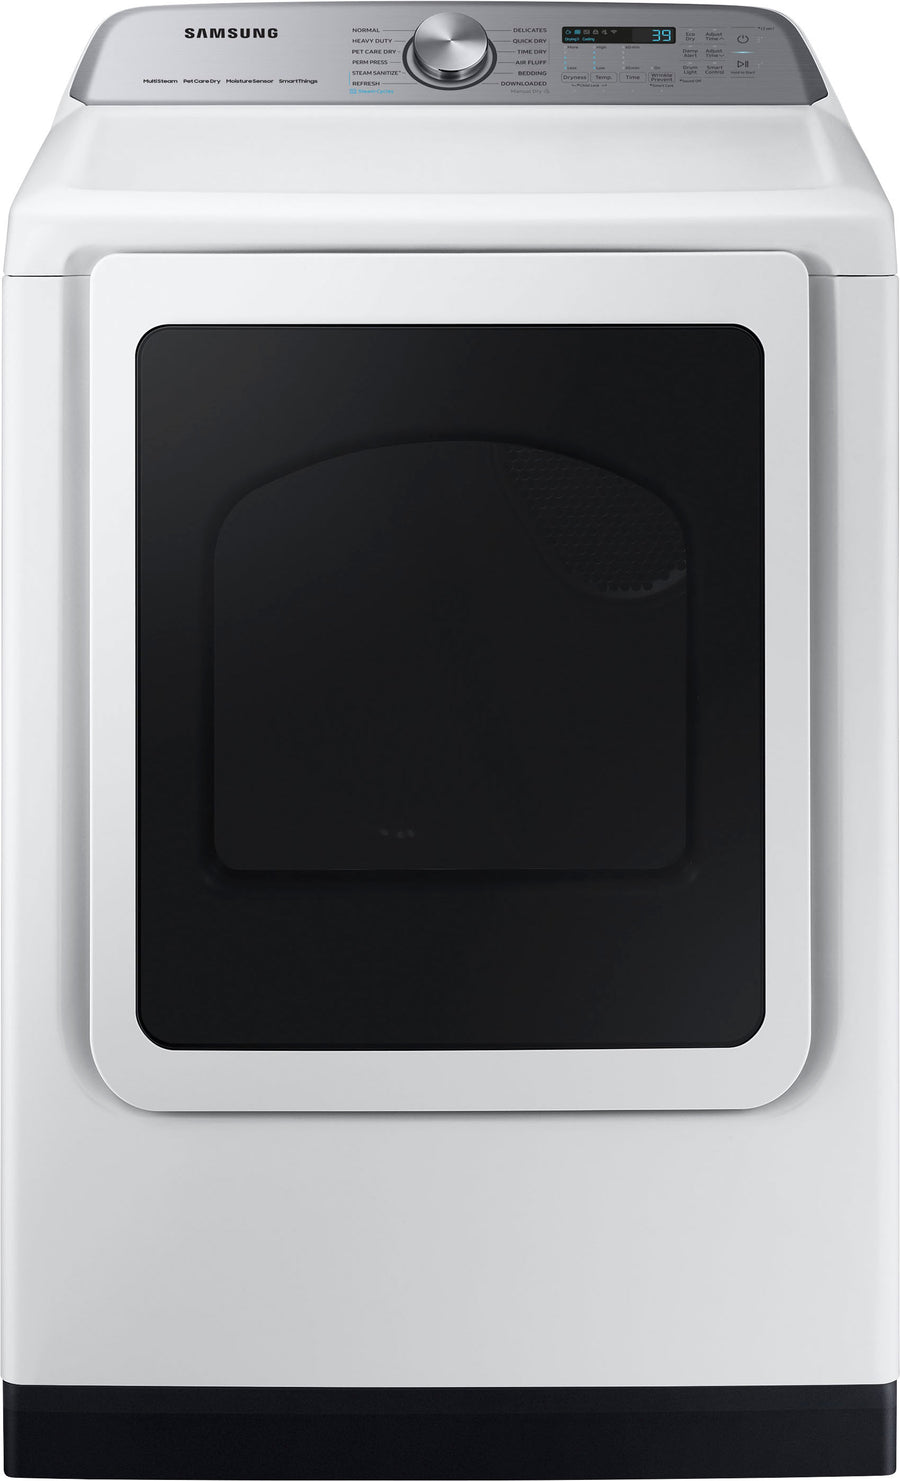 Samsung - 7.4 cu. ft. Smart Gas Dryer with Steam Sanitize+ - White_0